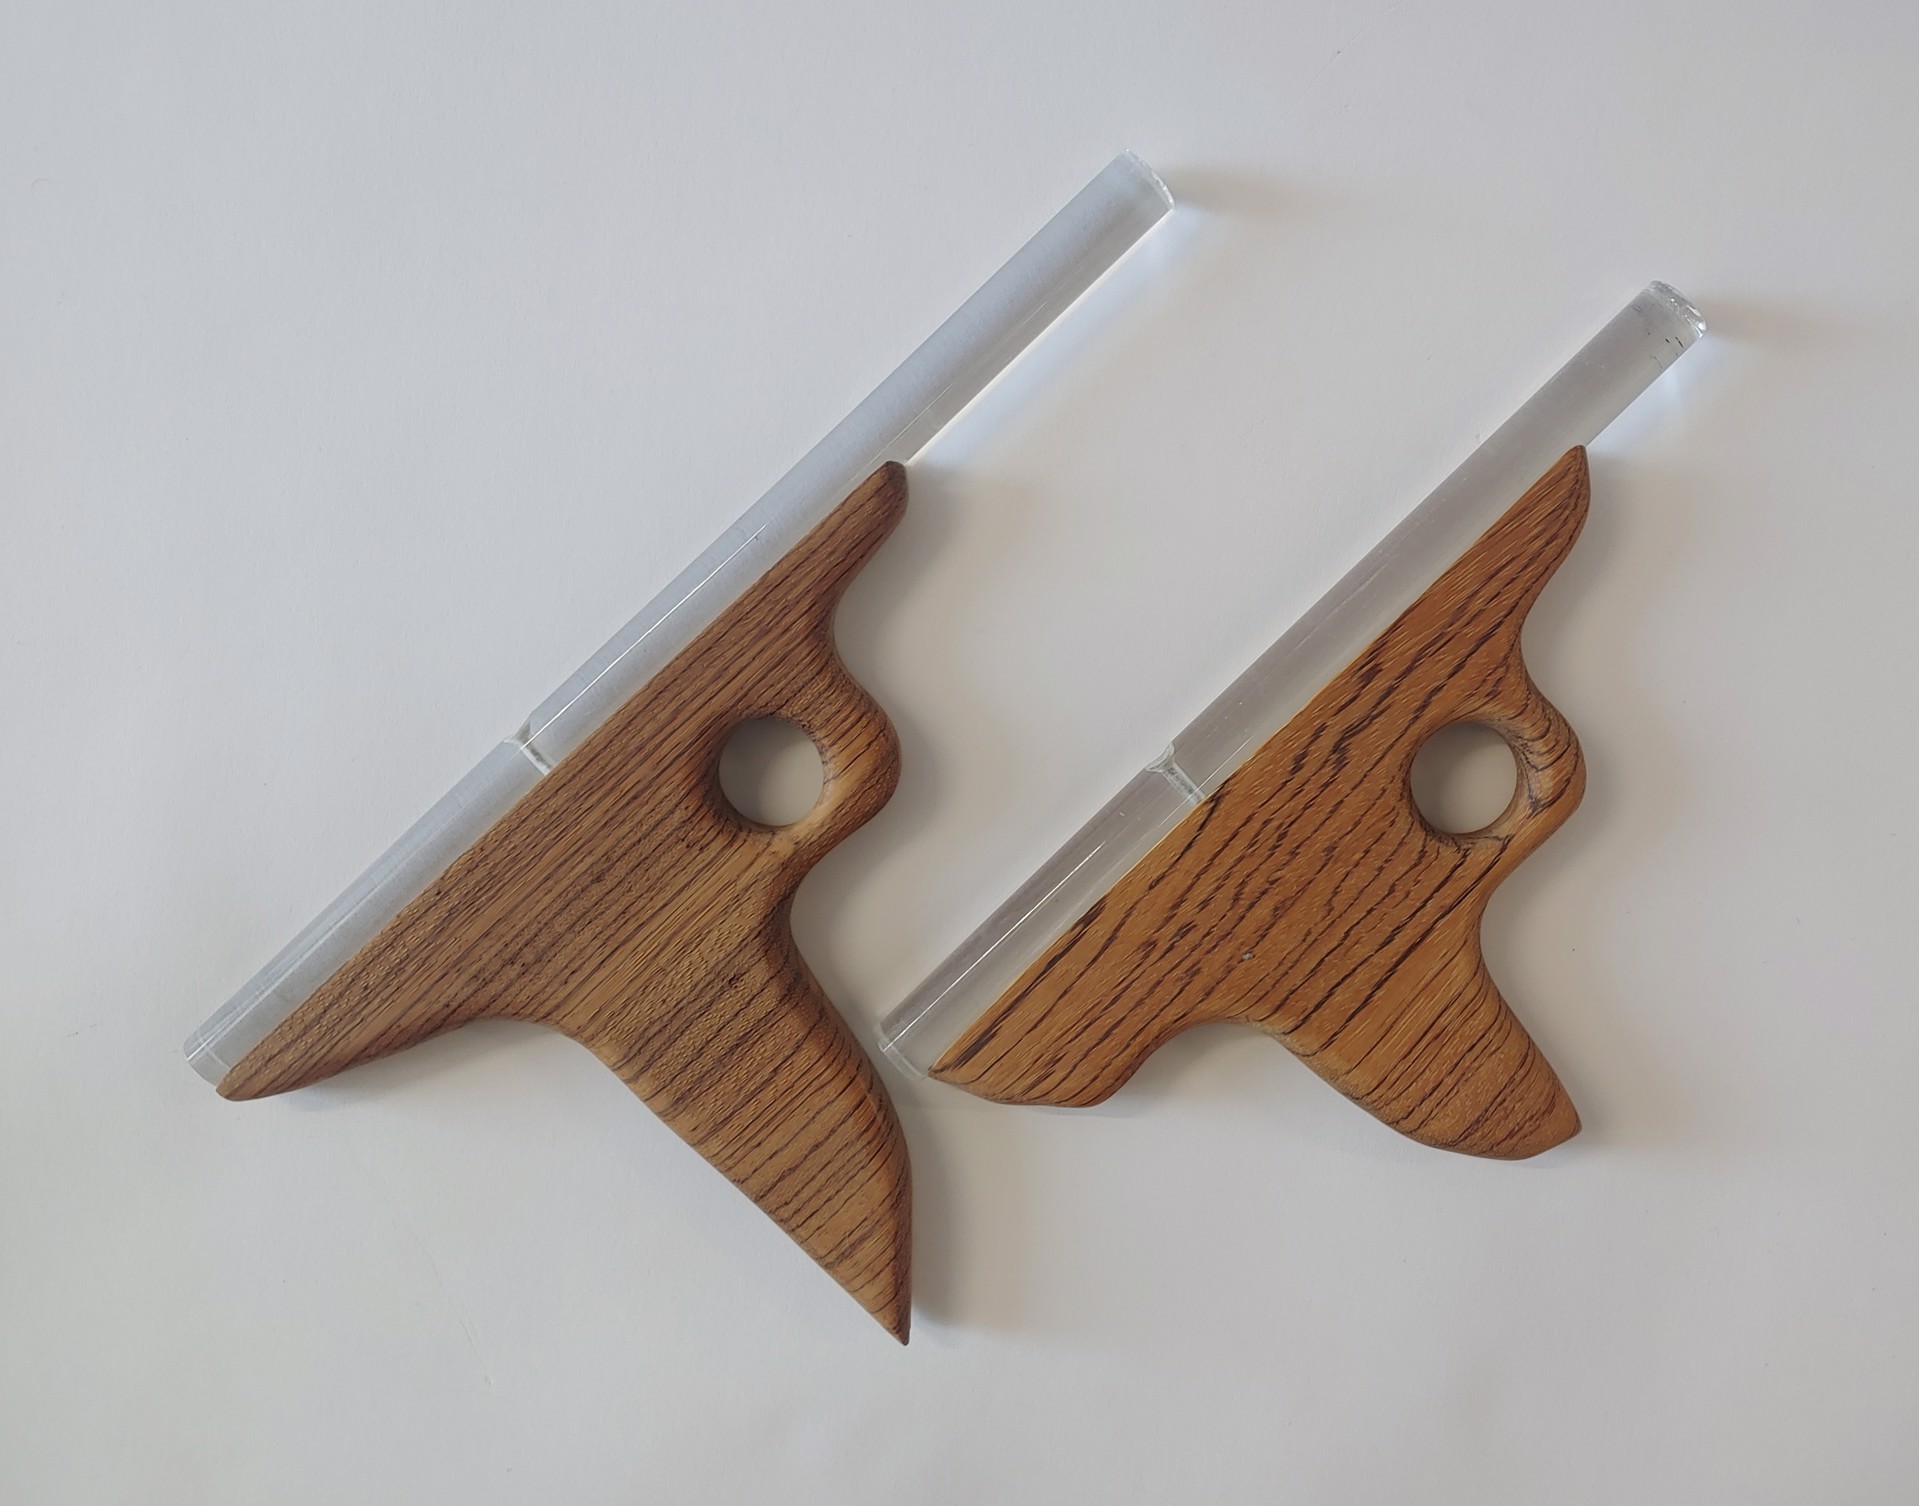 Wooden Luger #2 - Wood/Plastic Sculpture by David Amdur